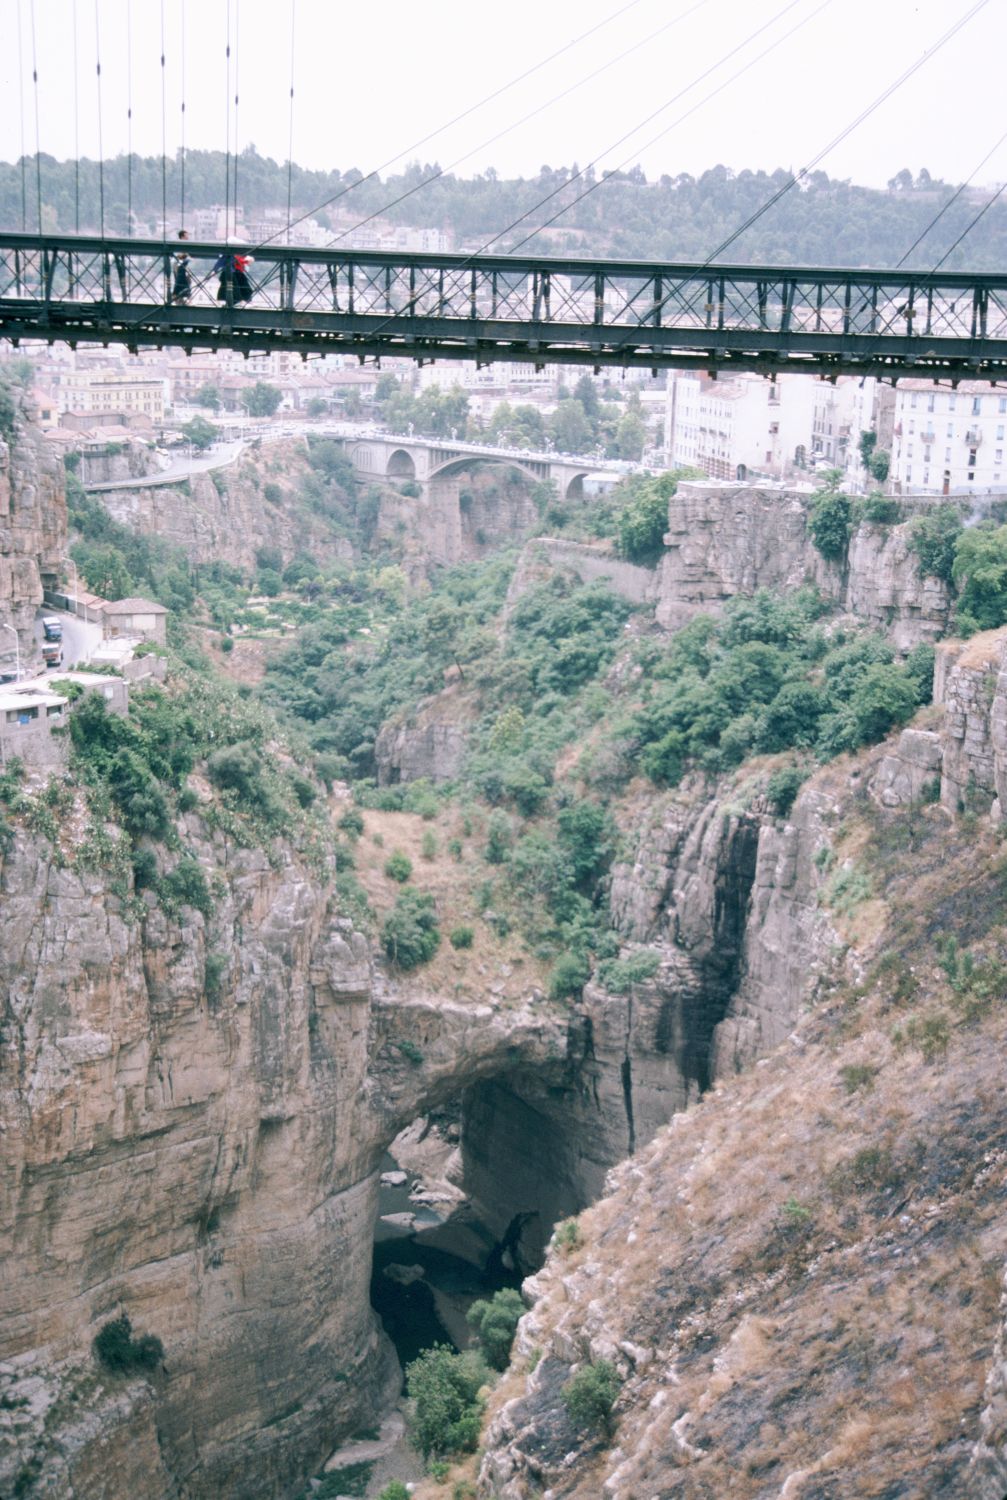 View east, portion of span at top, with Kantara Bridge below